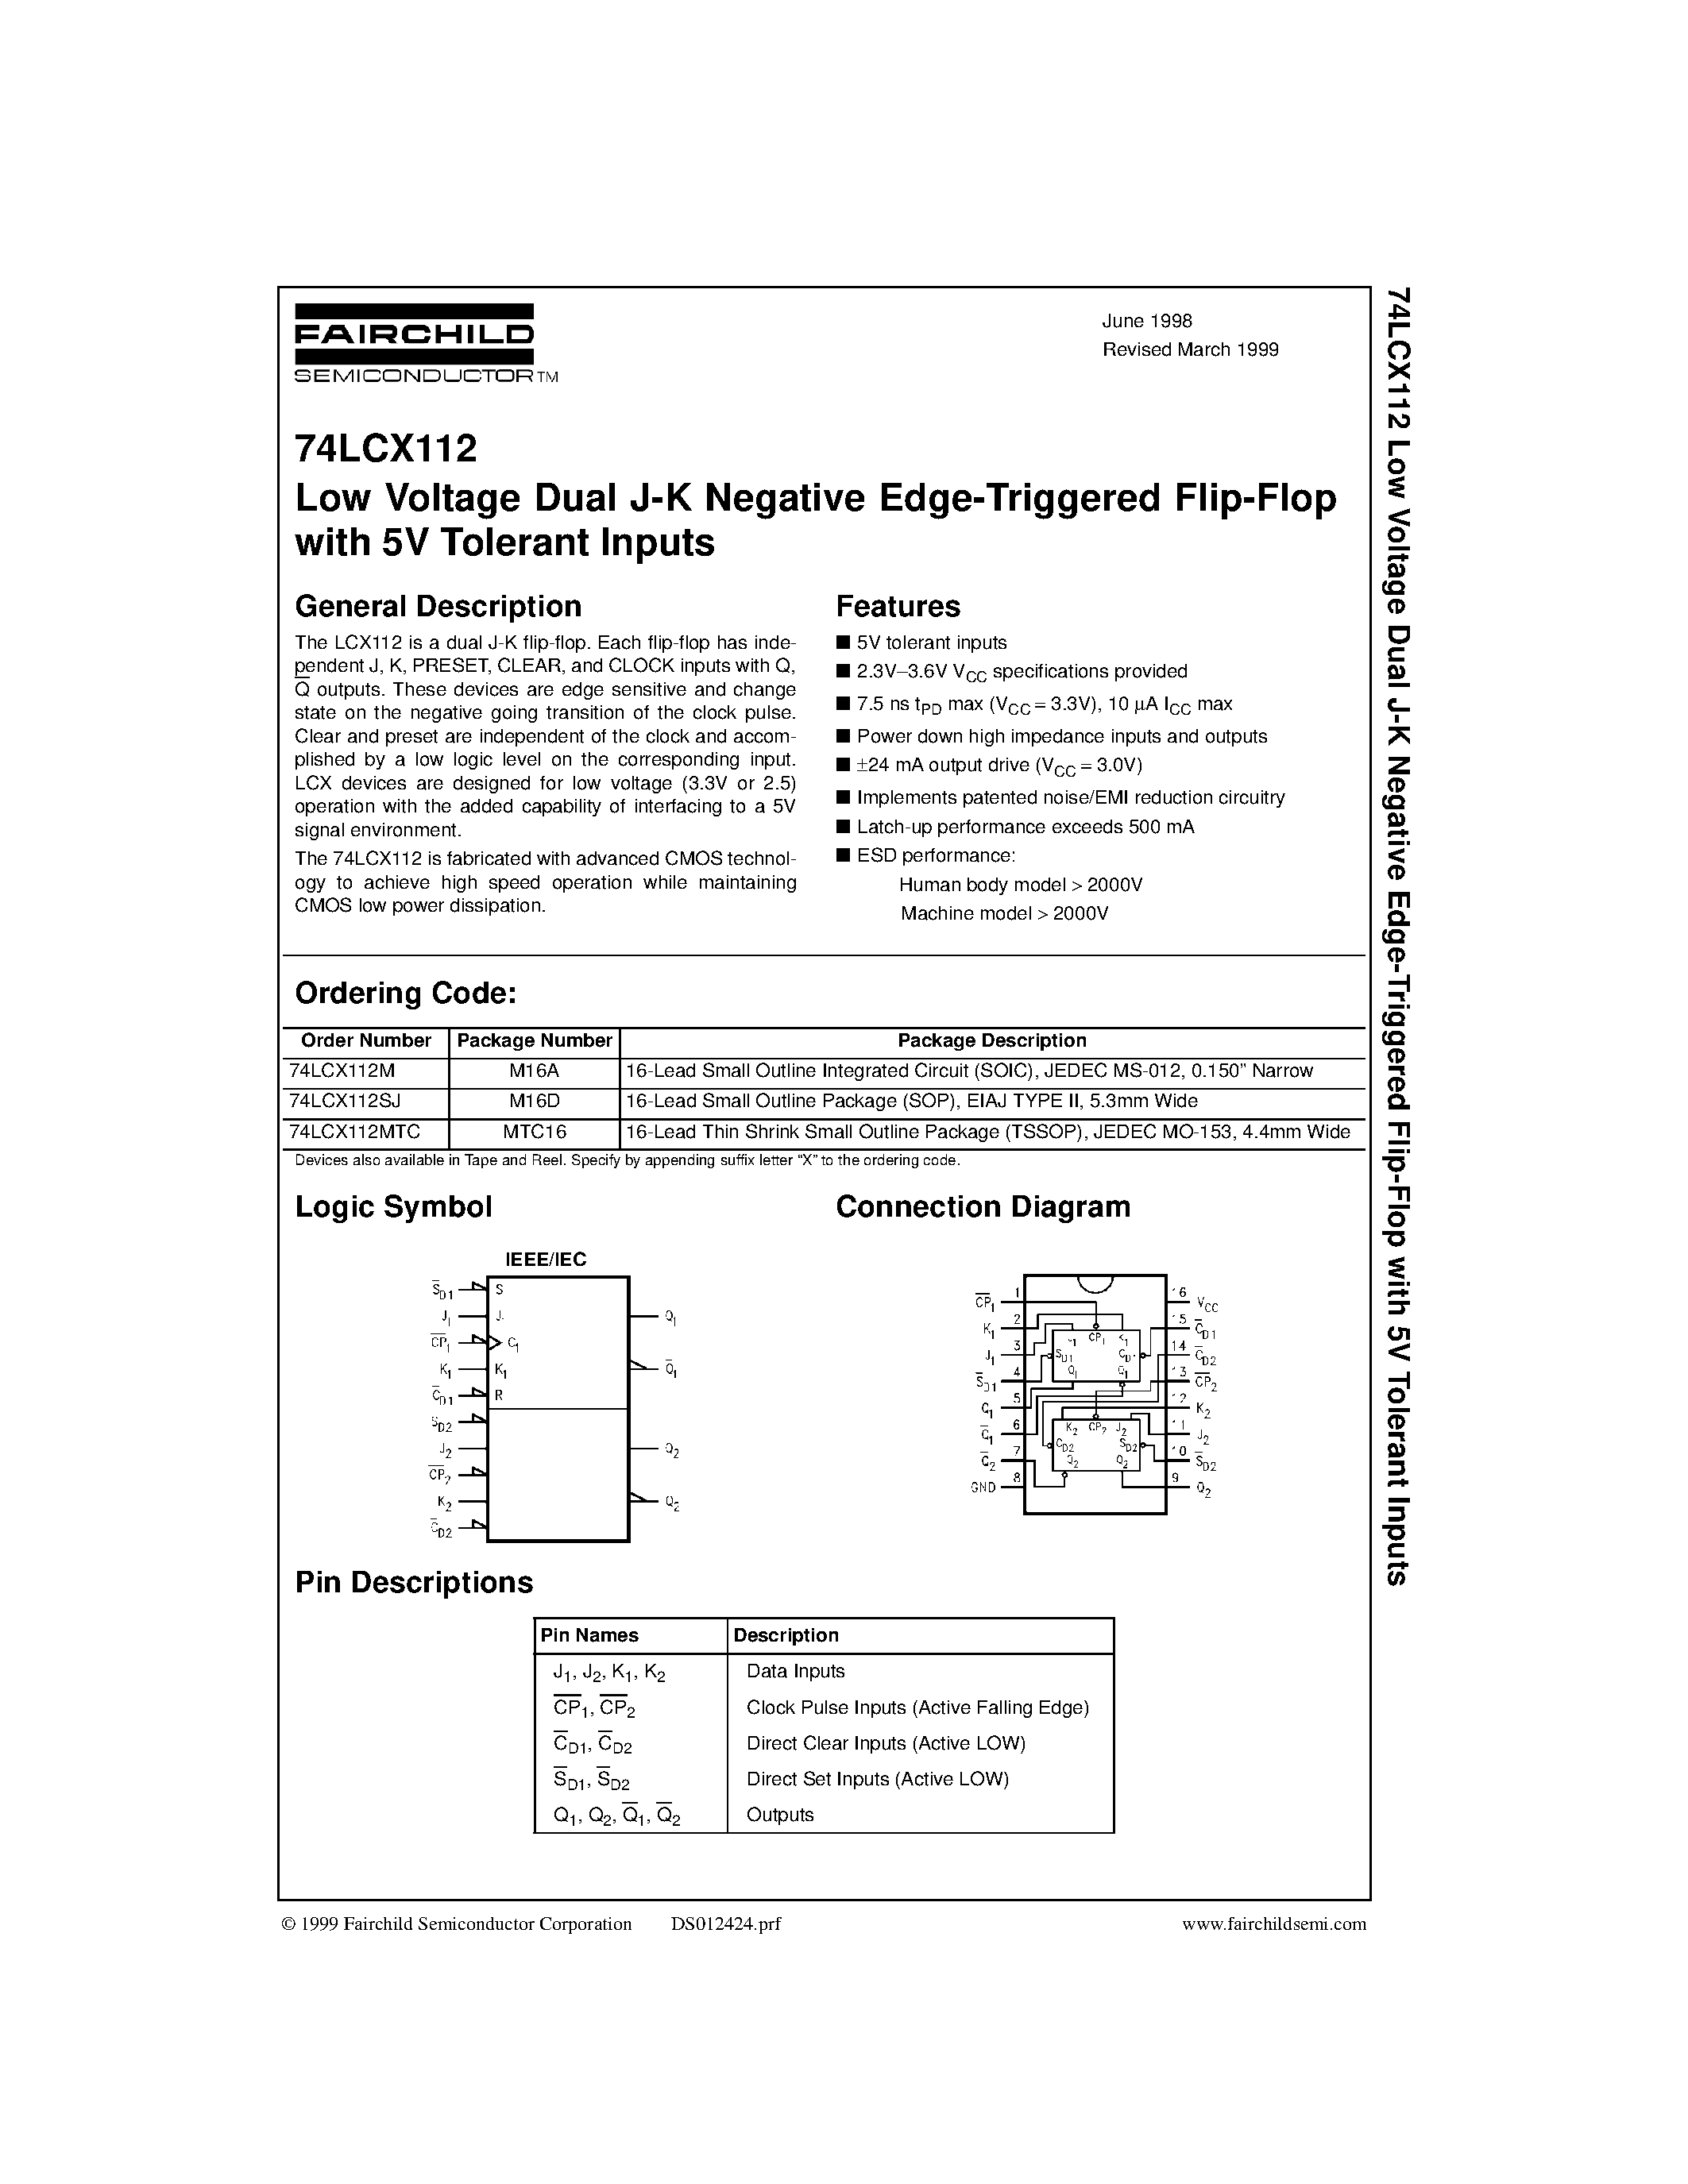 Datasheet 74LCX112 - Low Voltage Dual J-K Negative Edge-Triggered Flip-Flop with 5V Tolerant Inputs page 1